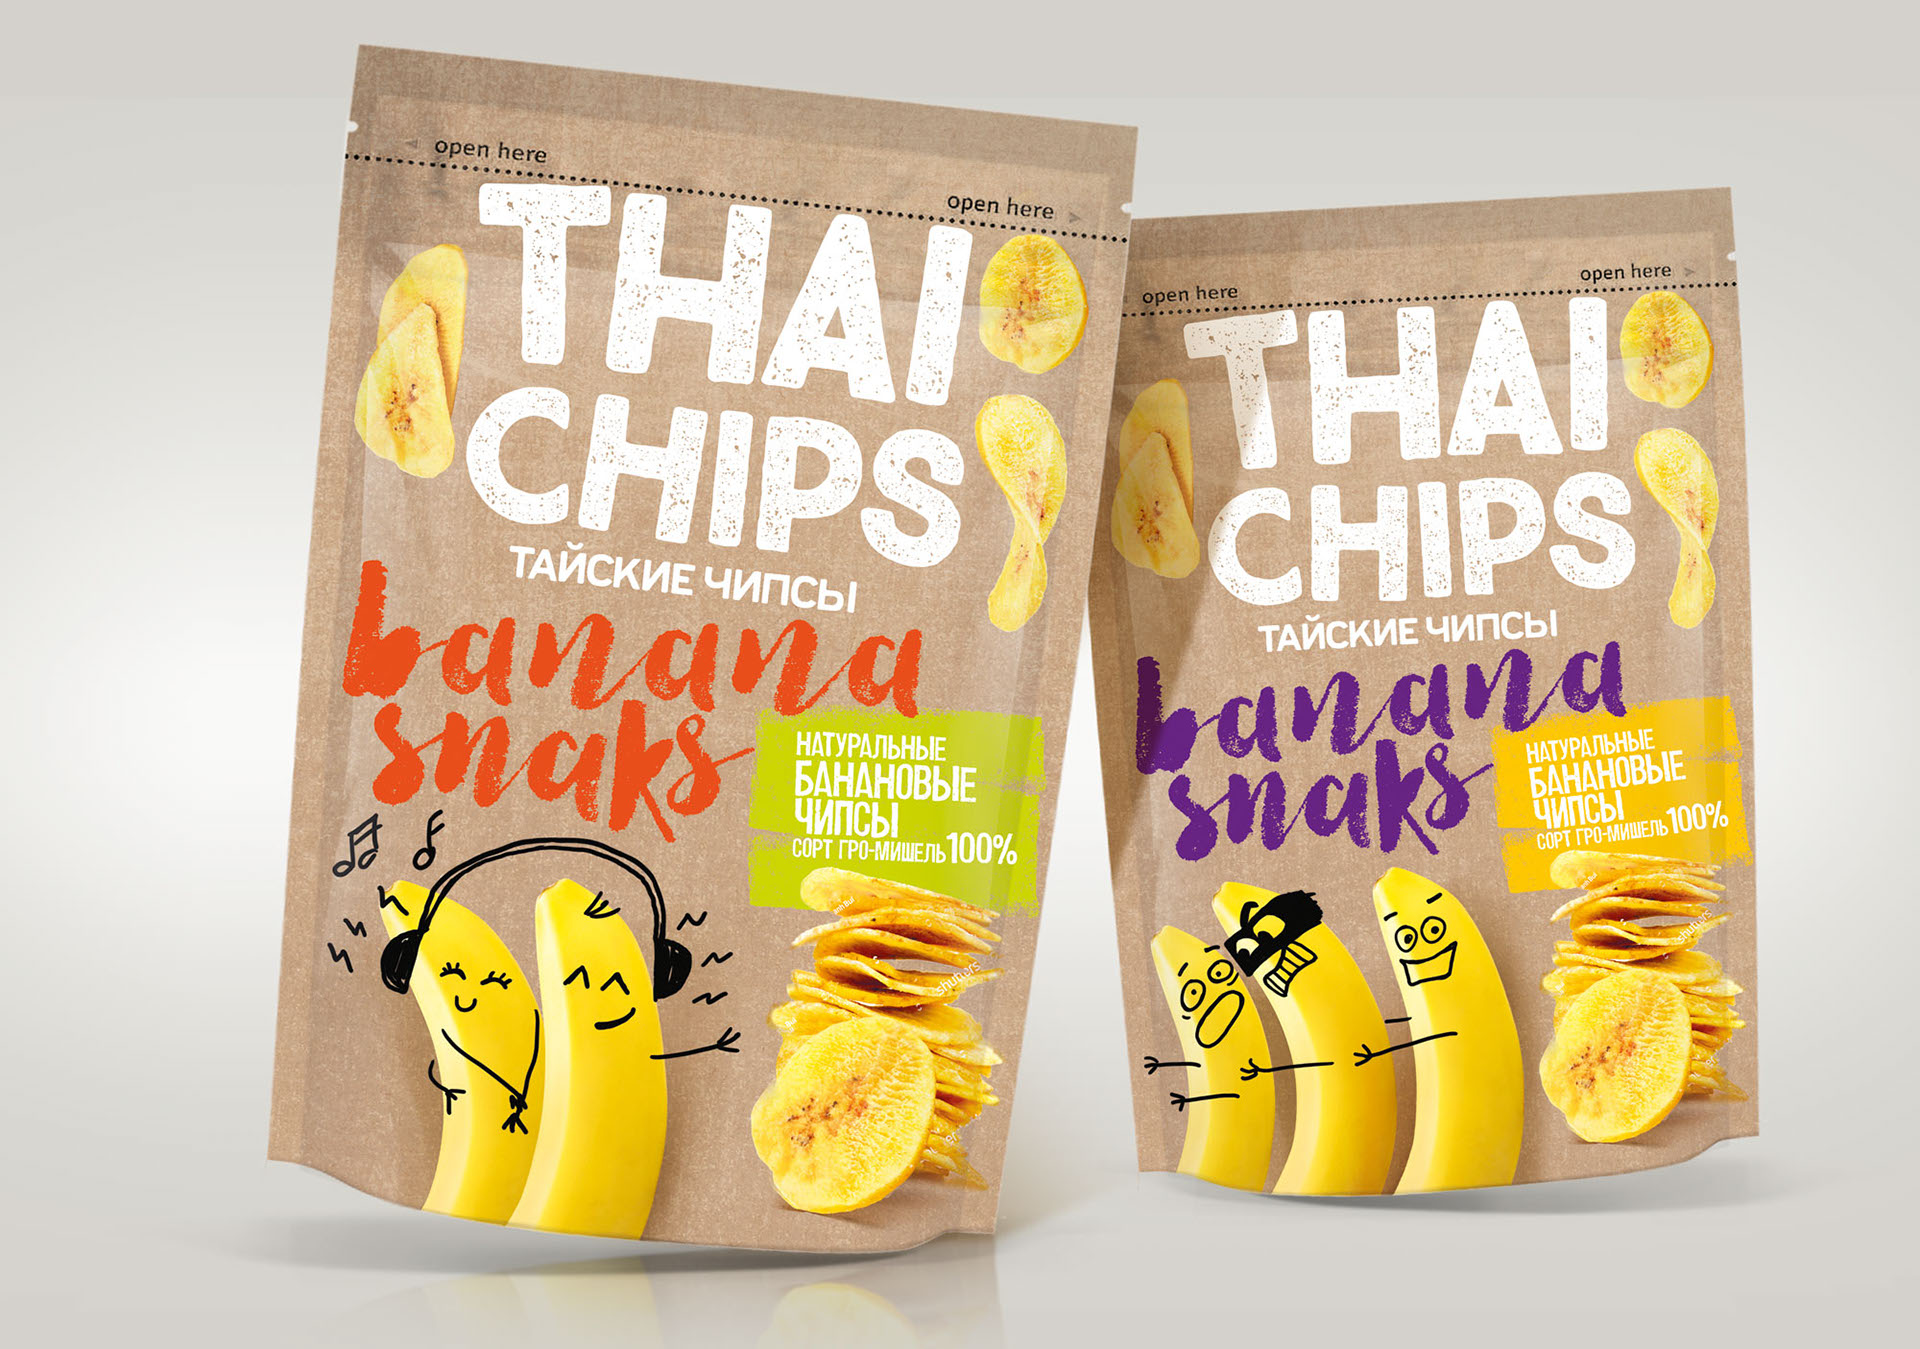 Thai Banana Chips Packaging design Concept